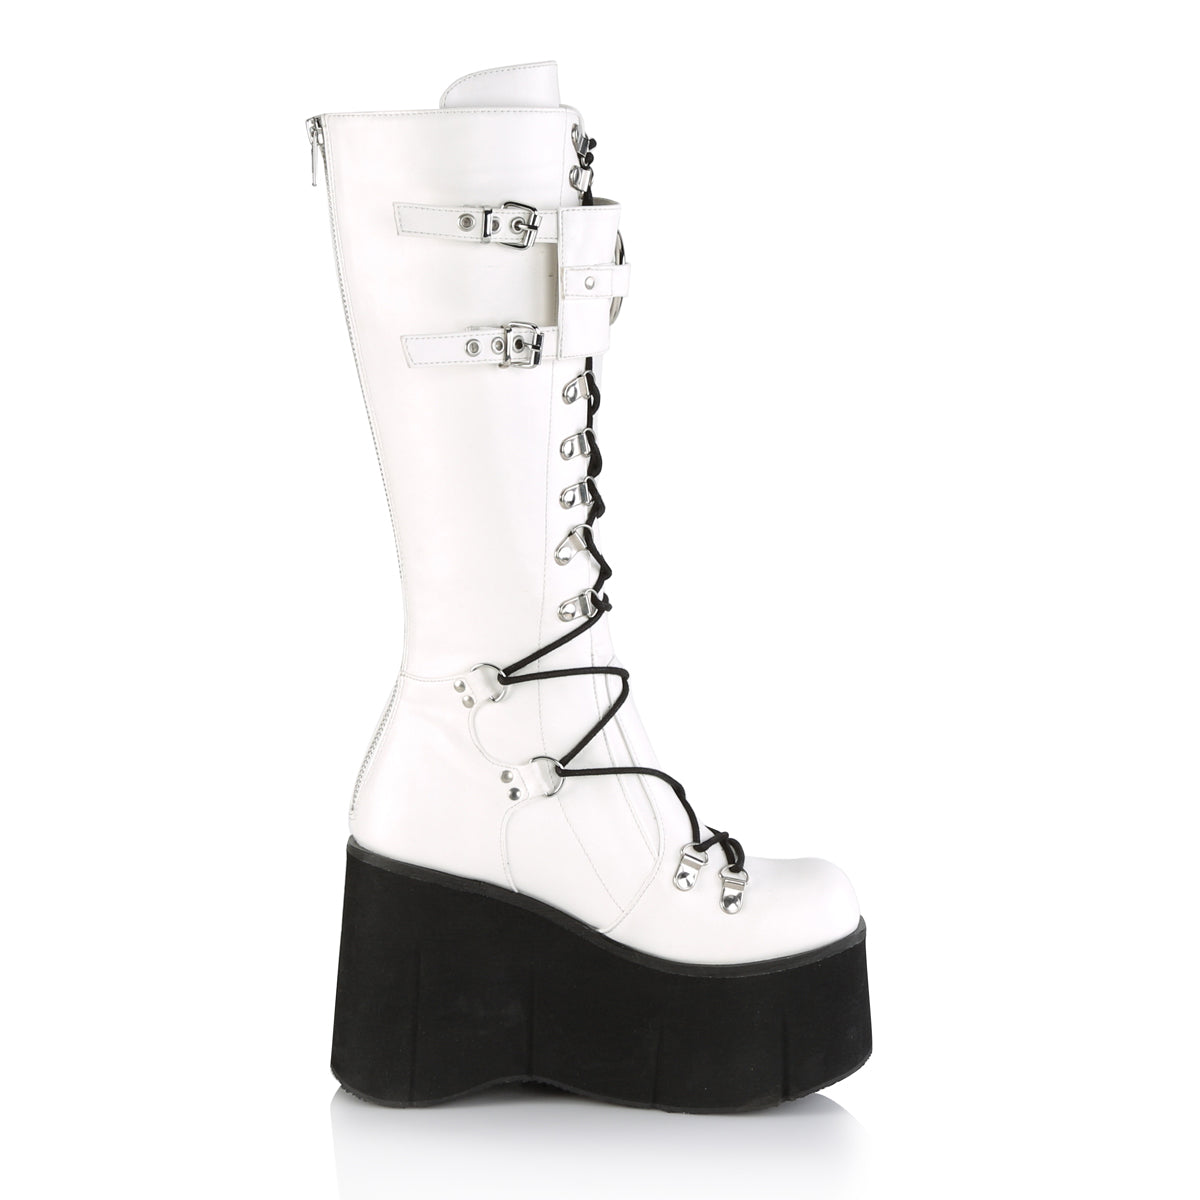 KERA-200 Demonia White Vegan Leather Women's Mid-Calf & Knee High Boots [Alternative Footwear]